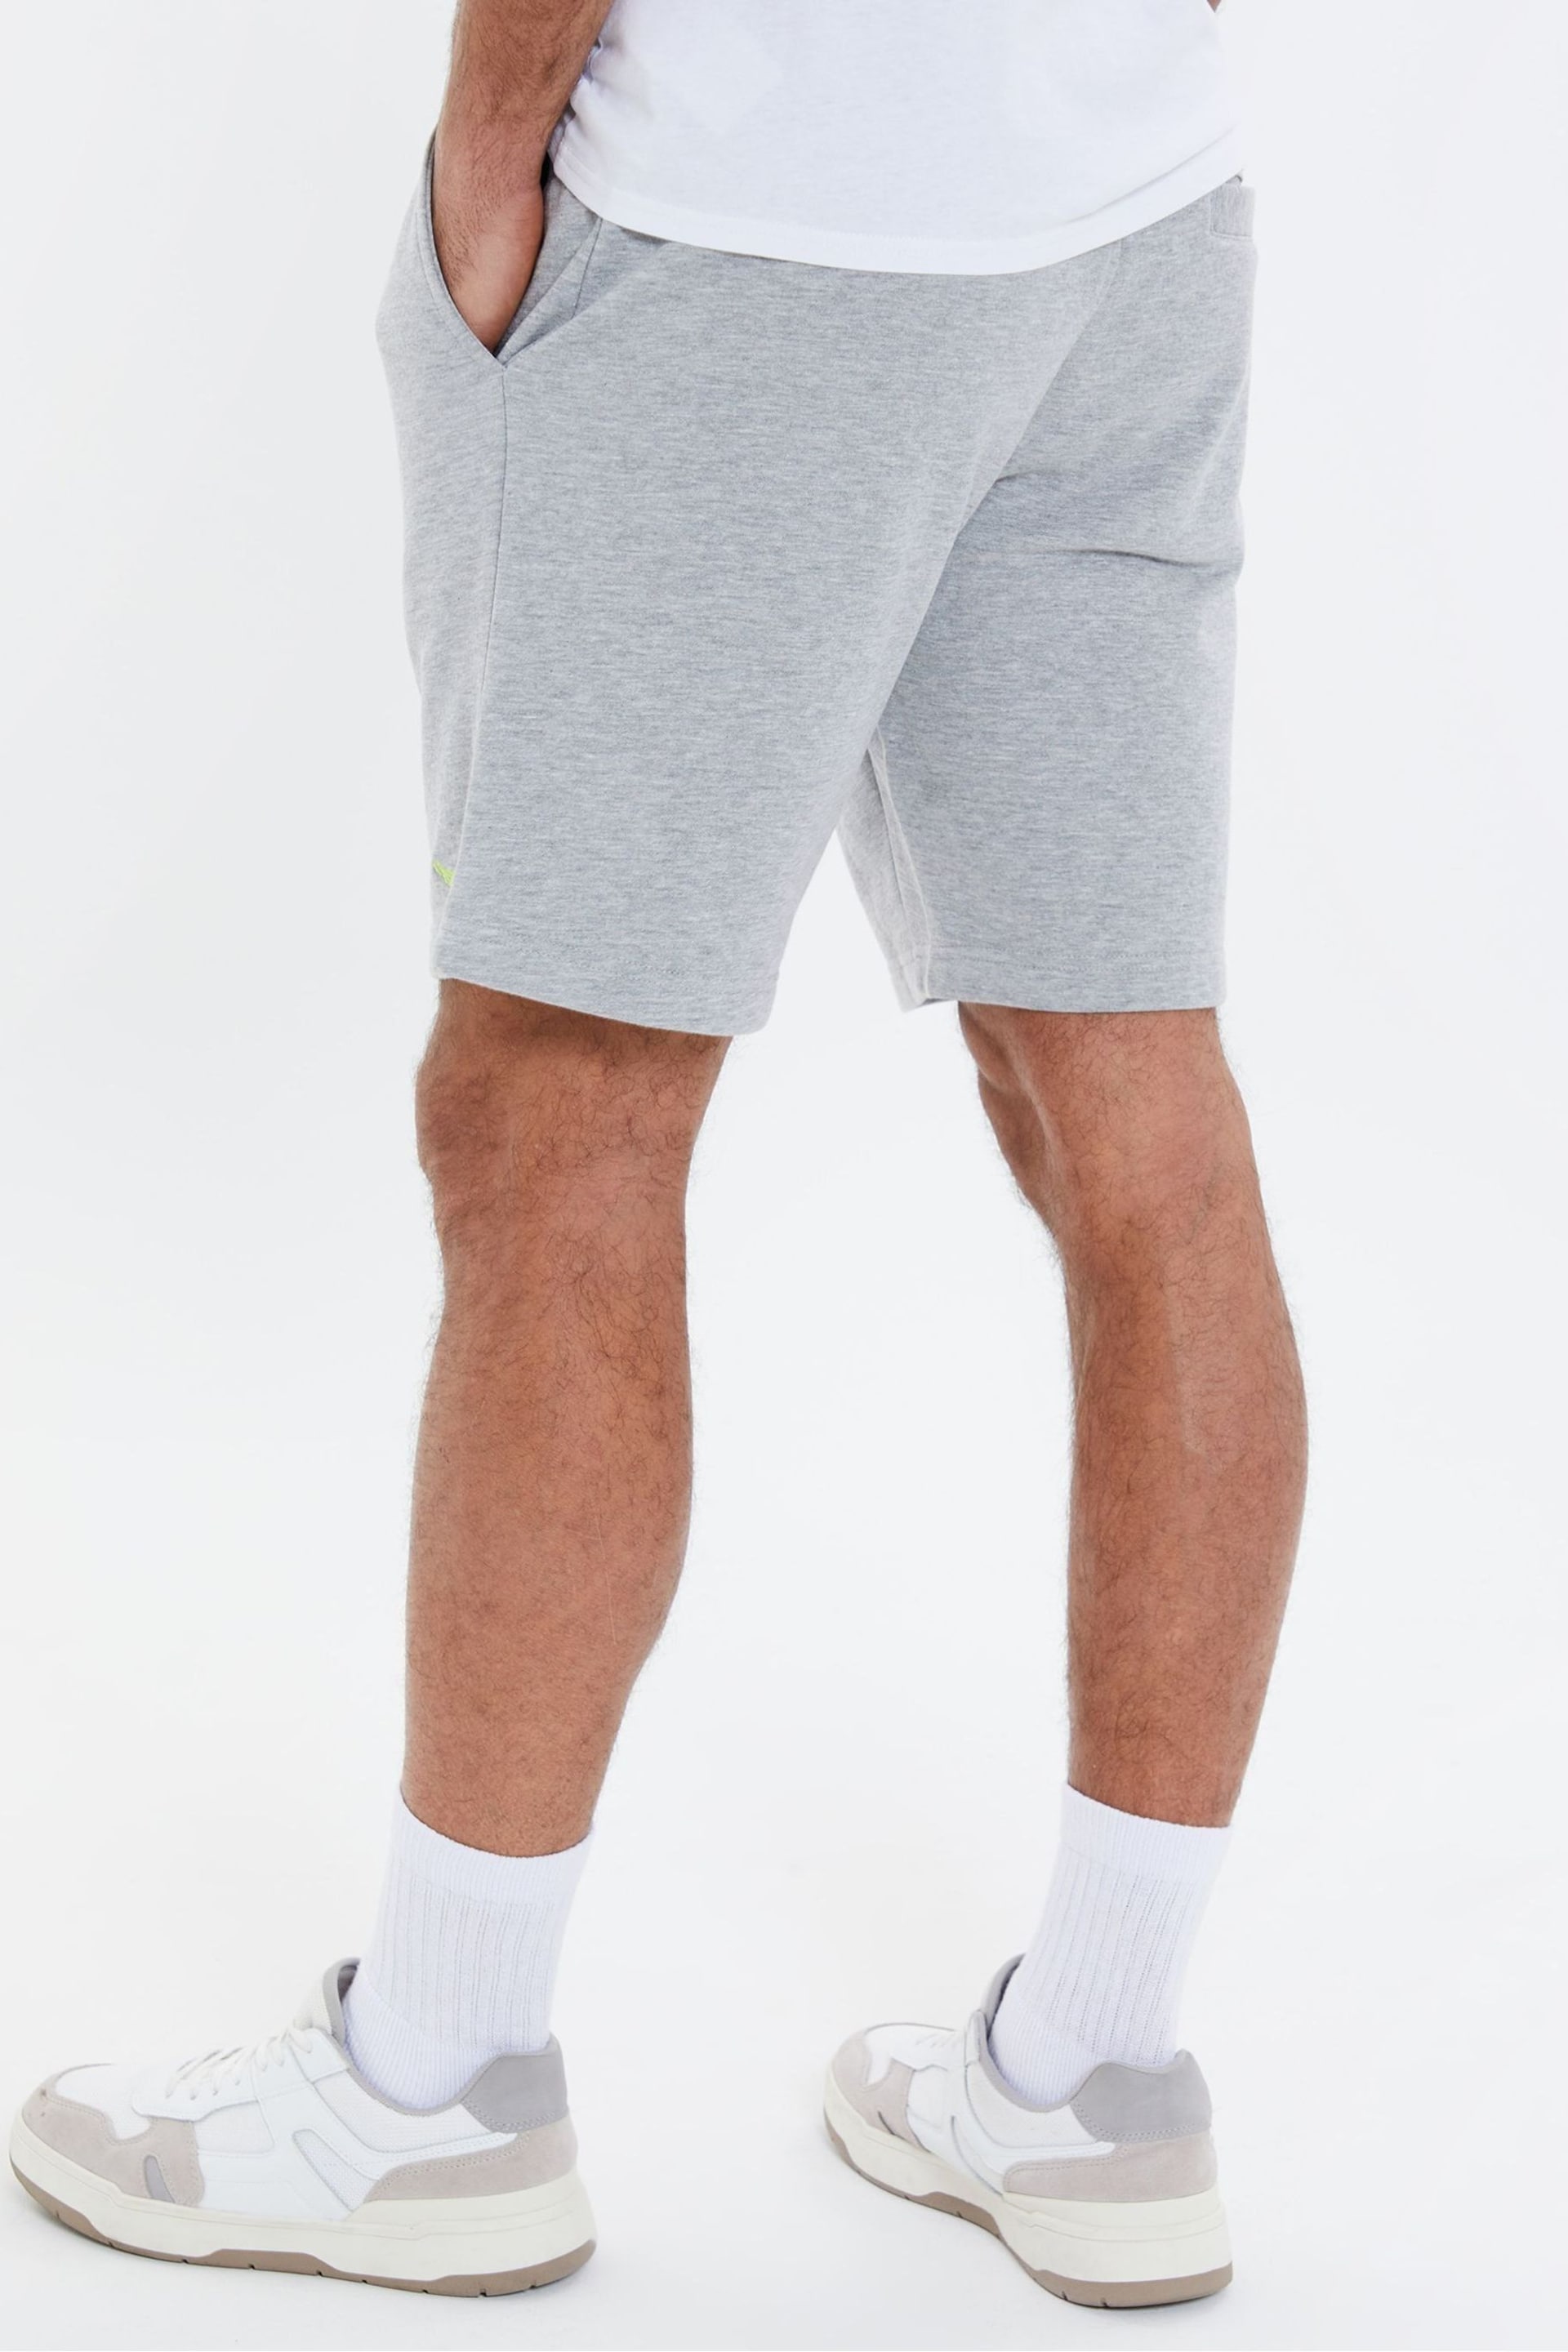 Threadbare Light Grey Basic Fleece Shorts - Image 2 of 4